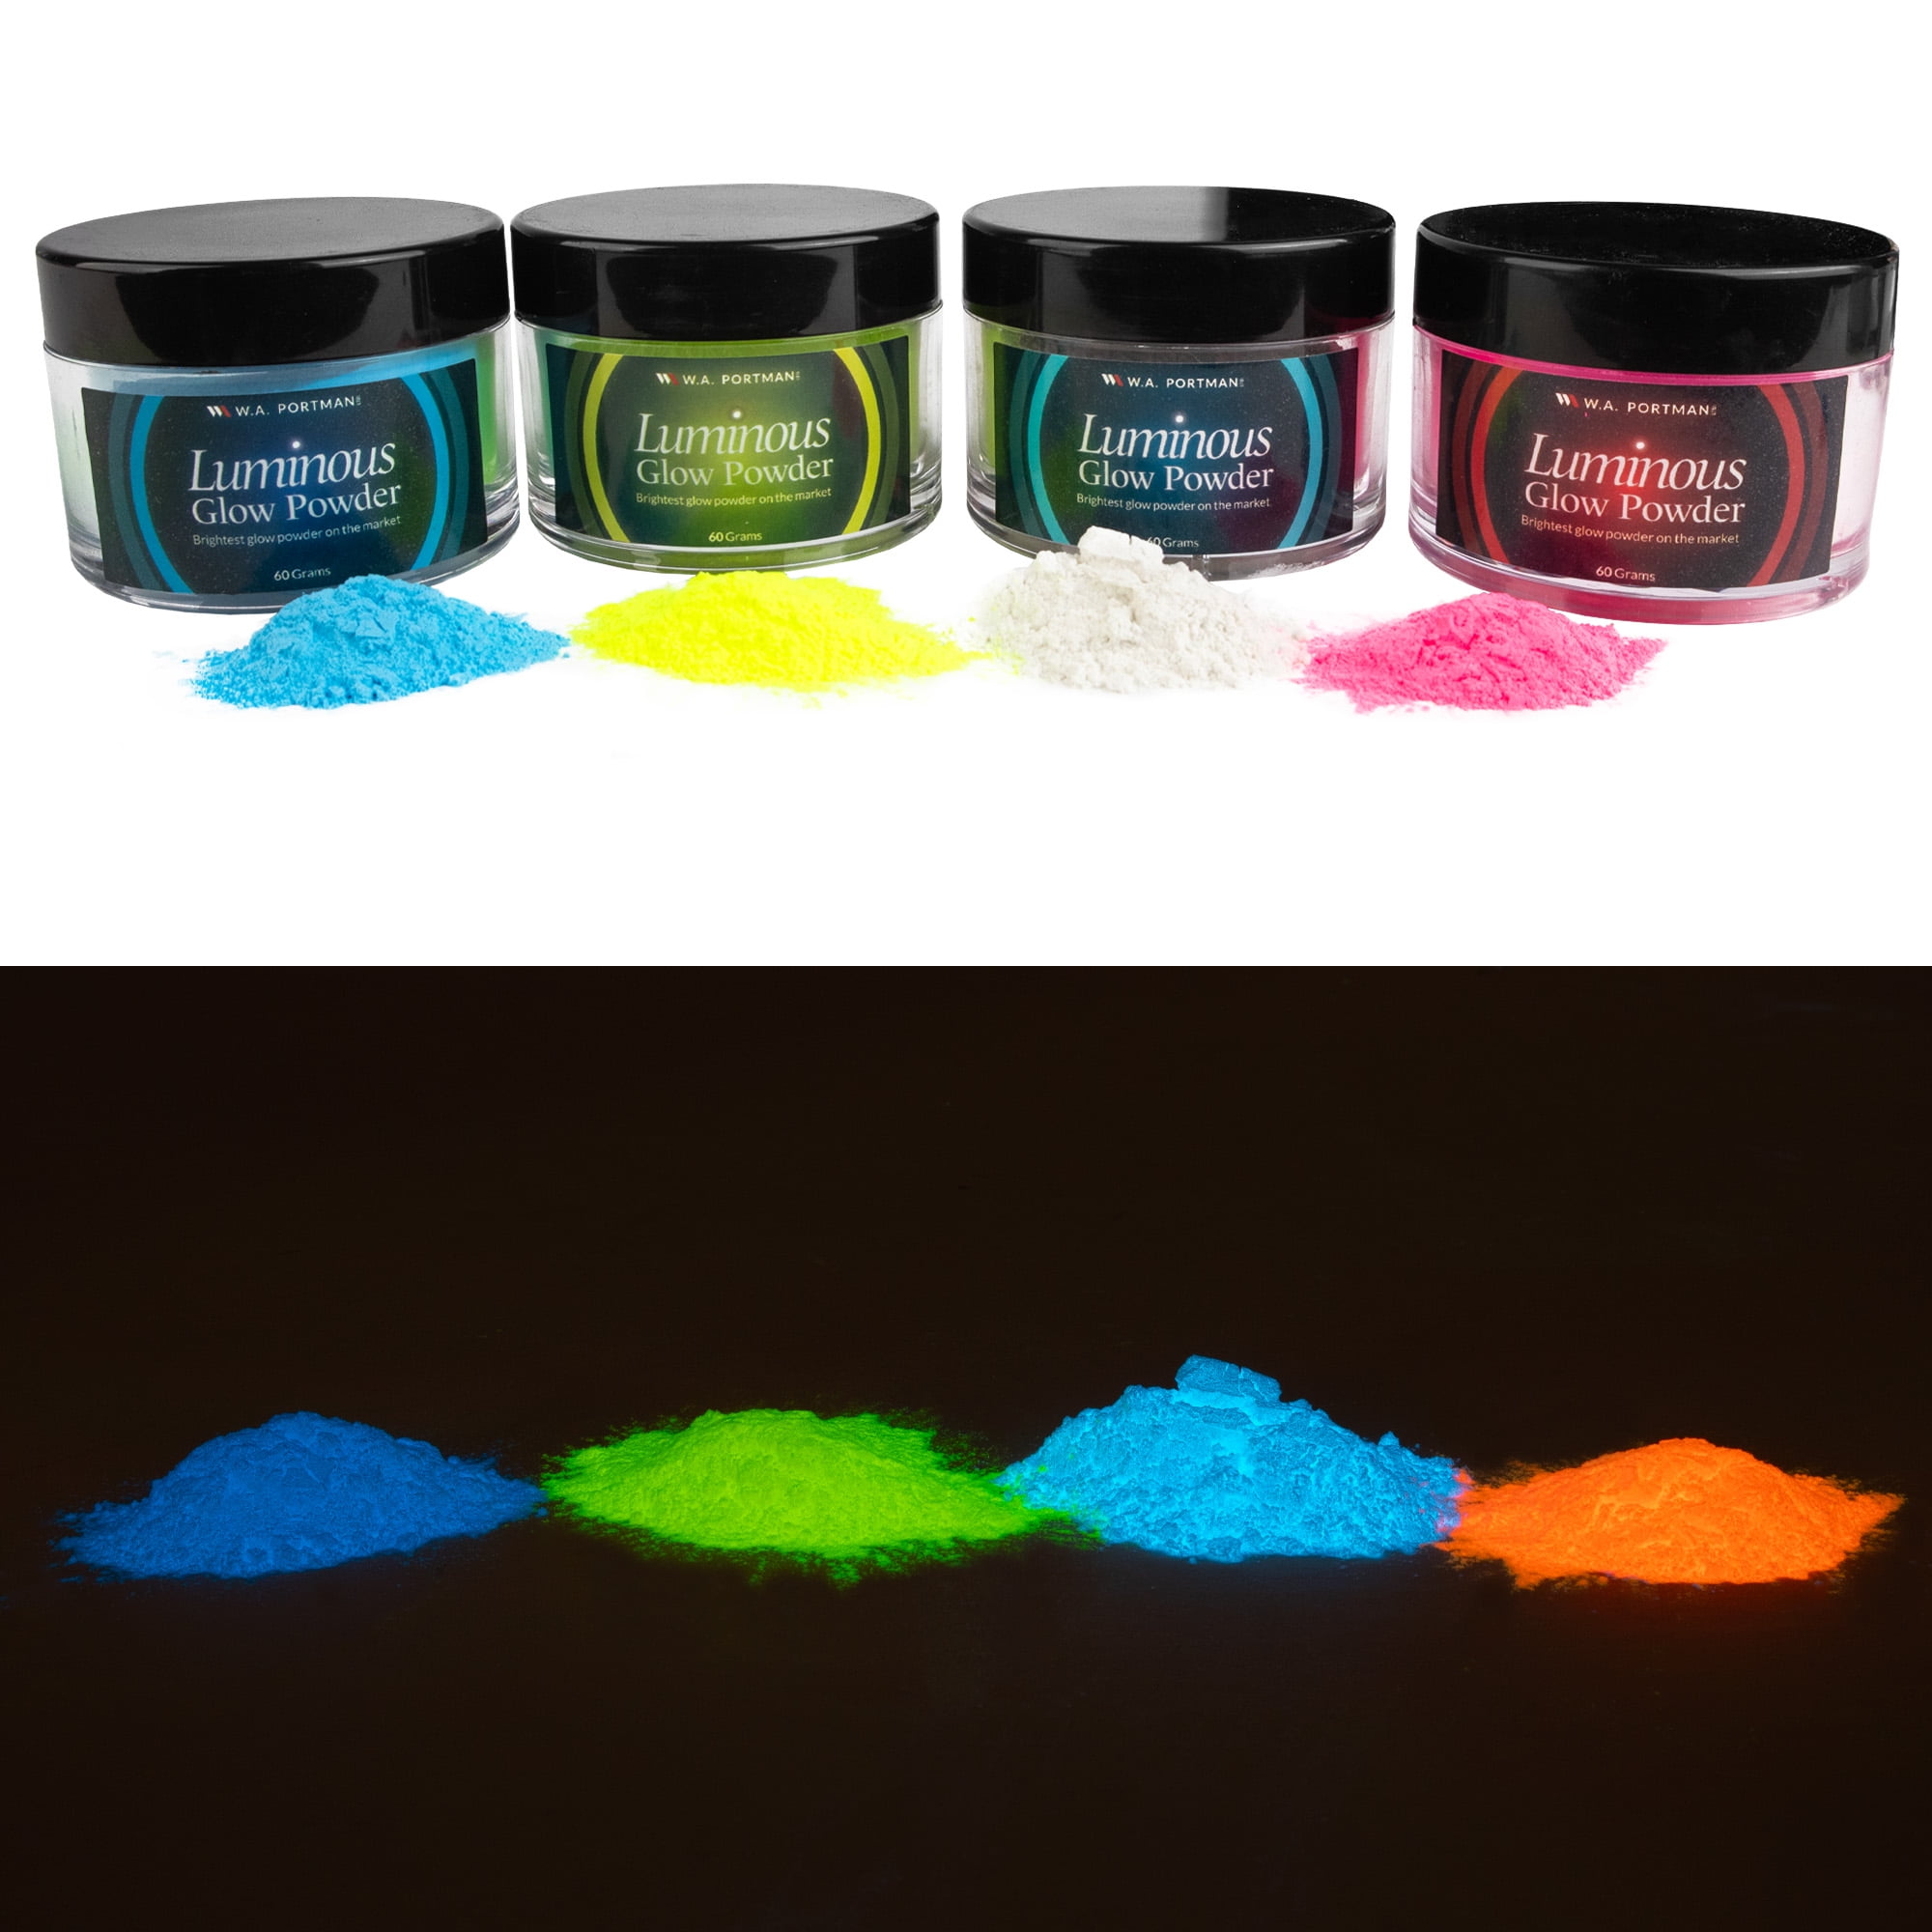 W.A. Portman Luminous Glow Powder, 4 Pack 60g (2.12oz) Jars of Glow in the  Dark Pigment Powder